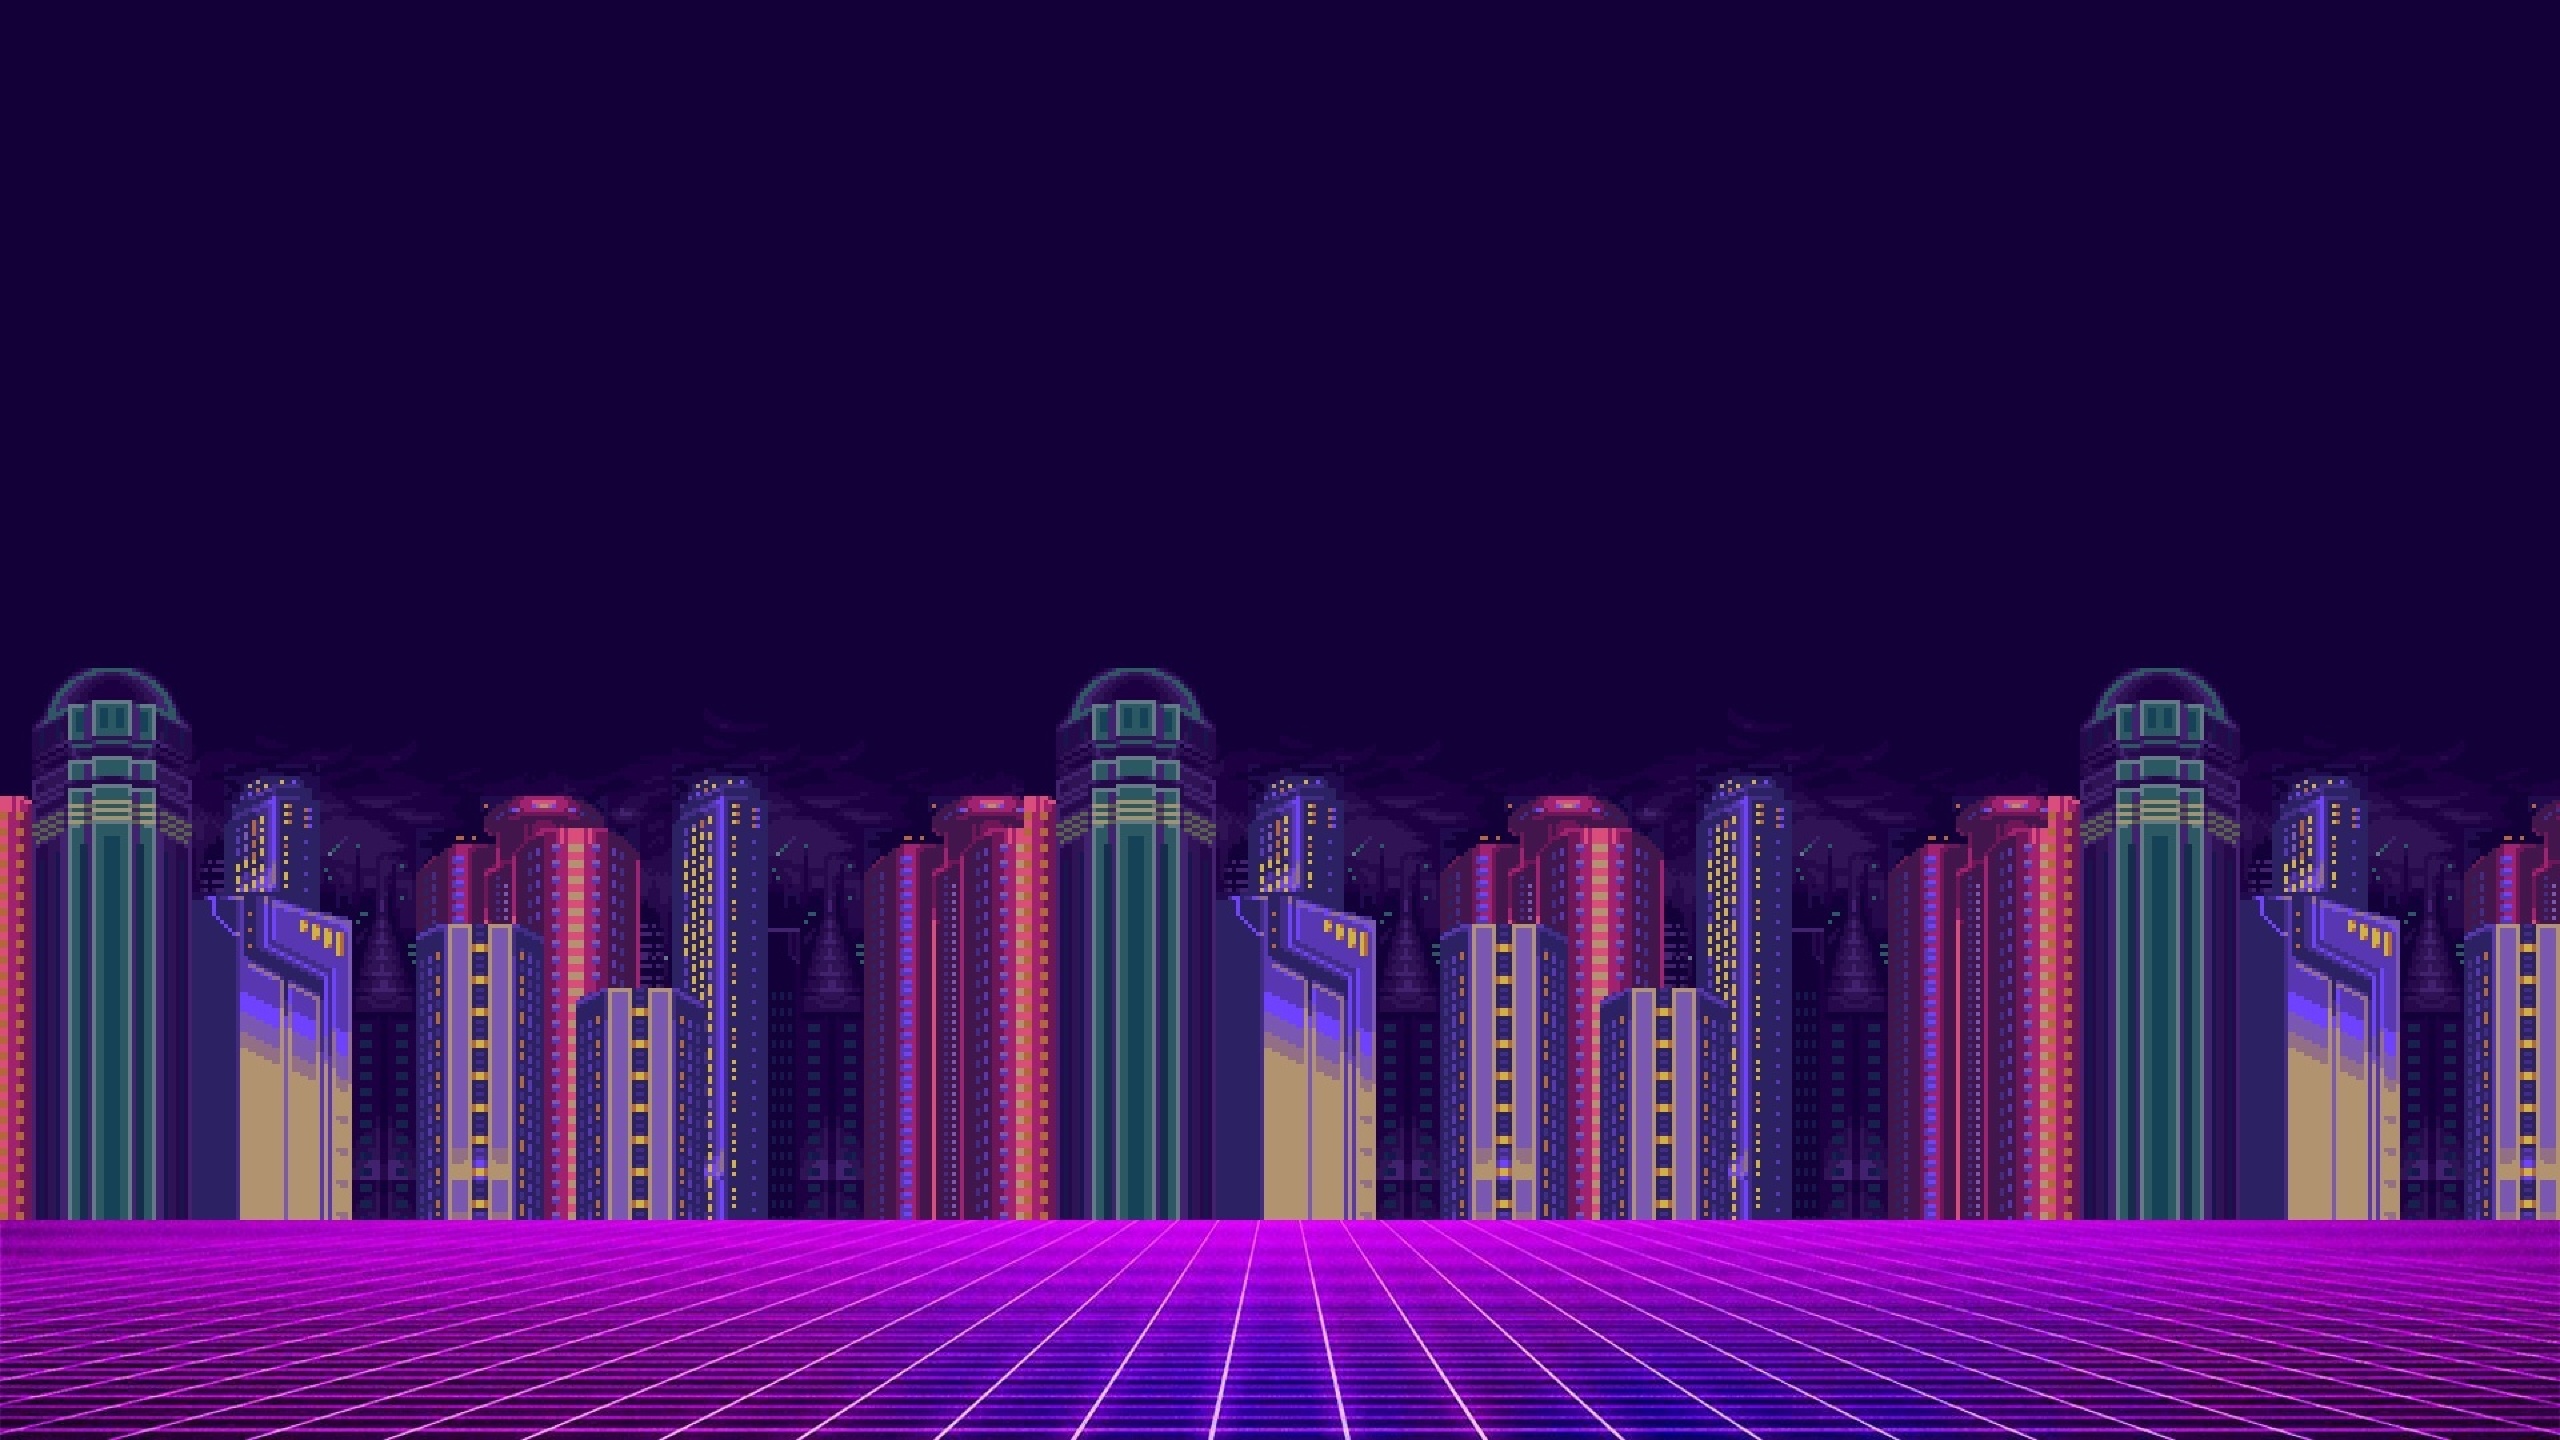 Neon City 8 Bit